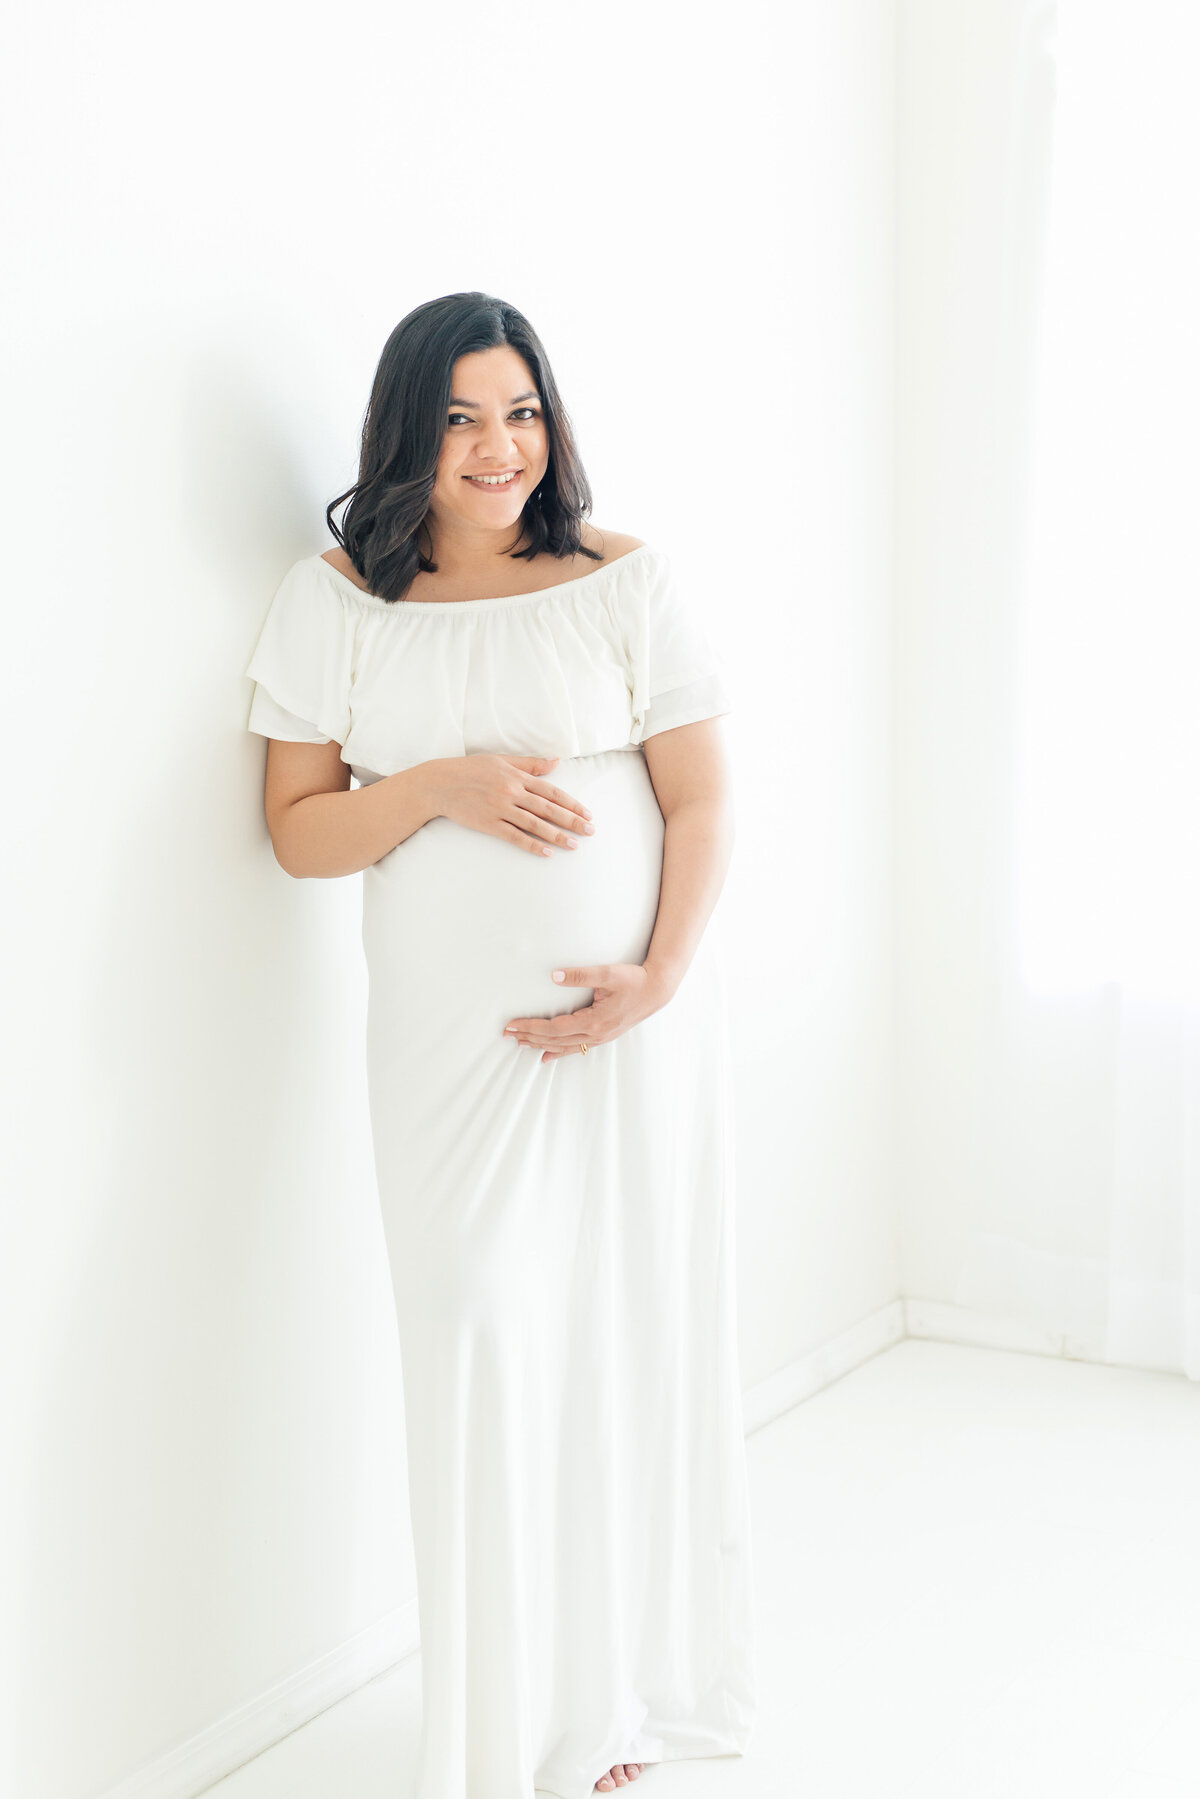 O'fallon IL Maternity Photography Studio